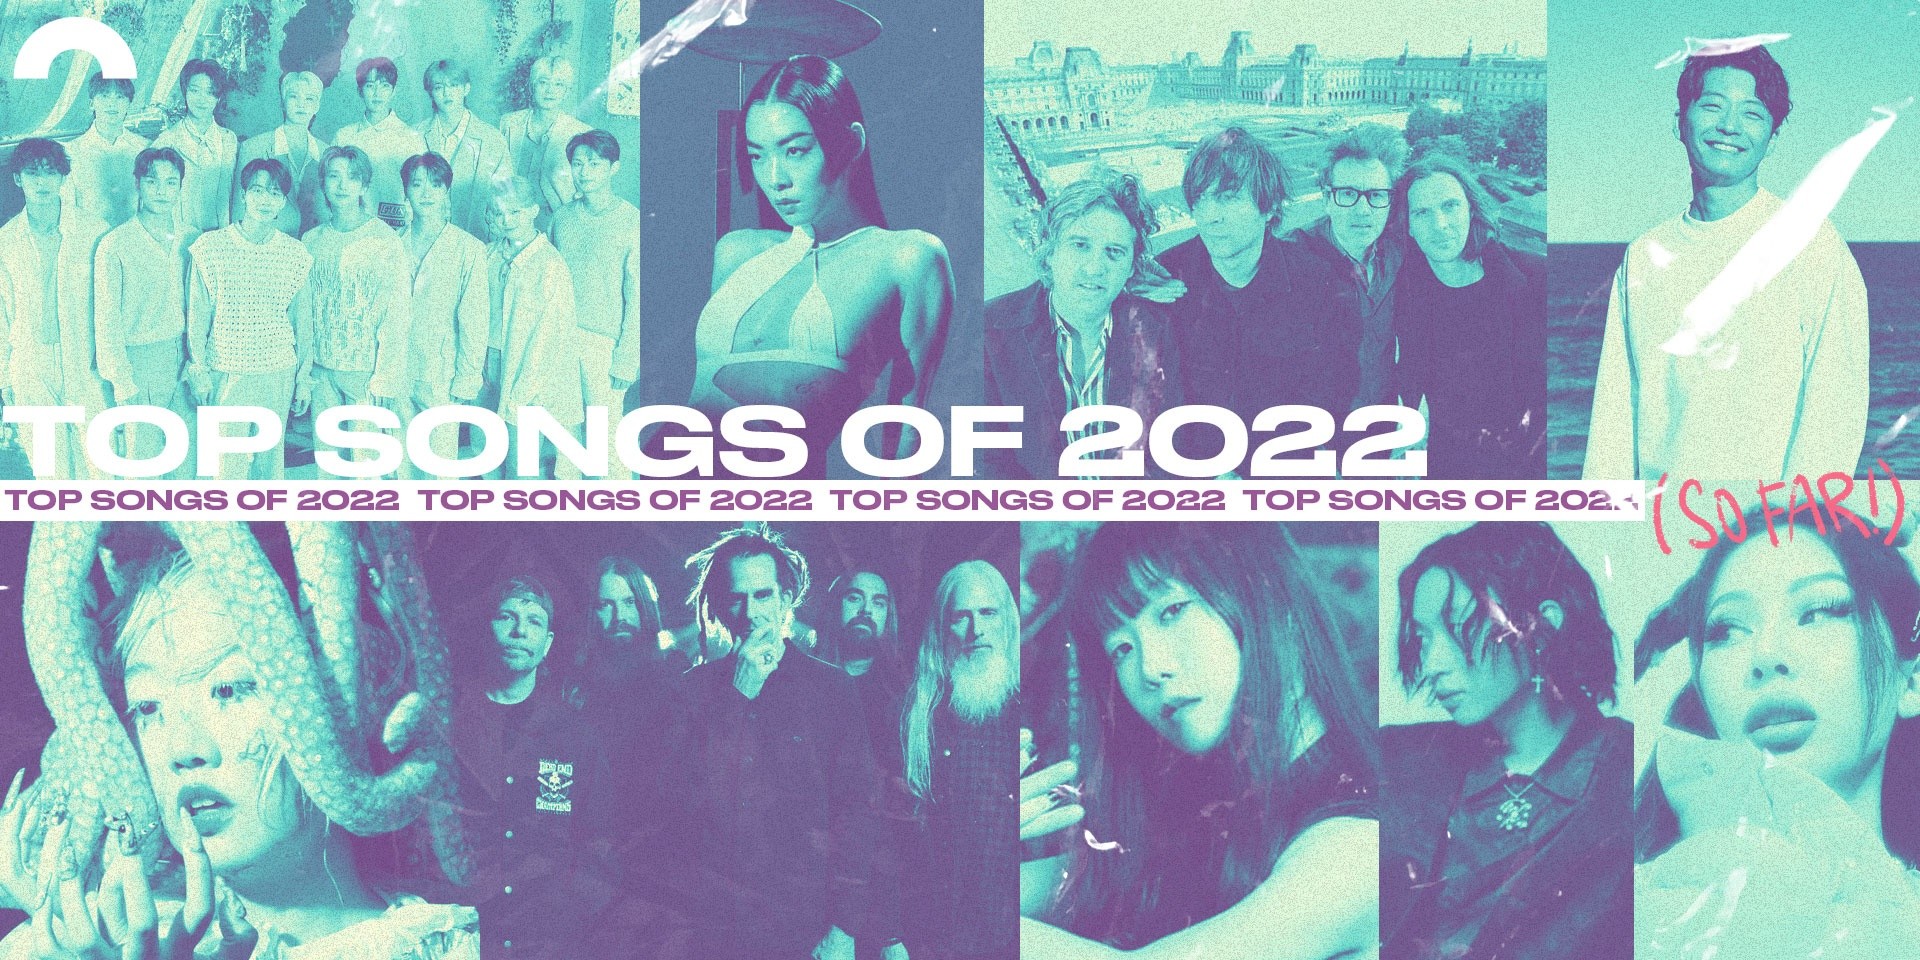 Top Songs of 2022 (so far) – SEVENTEEN, Rina Sawayama, keshi, Gen Hoshino, ena mori, Jessi, Aimer, and more